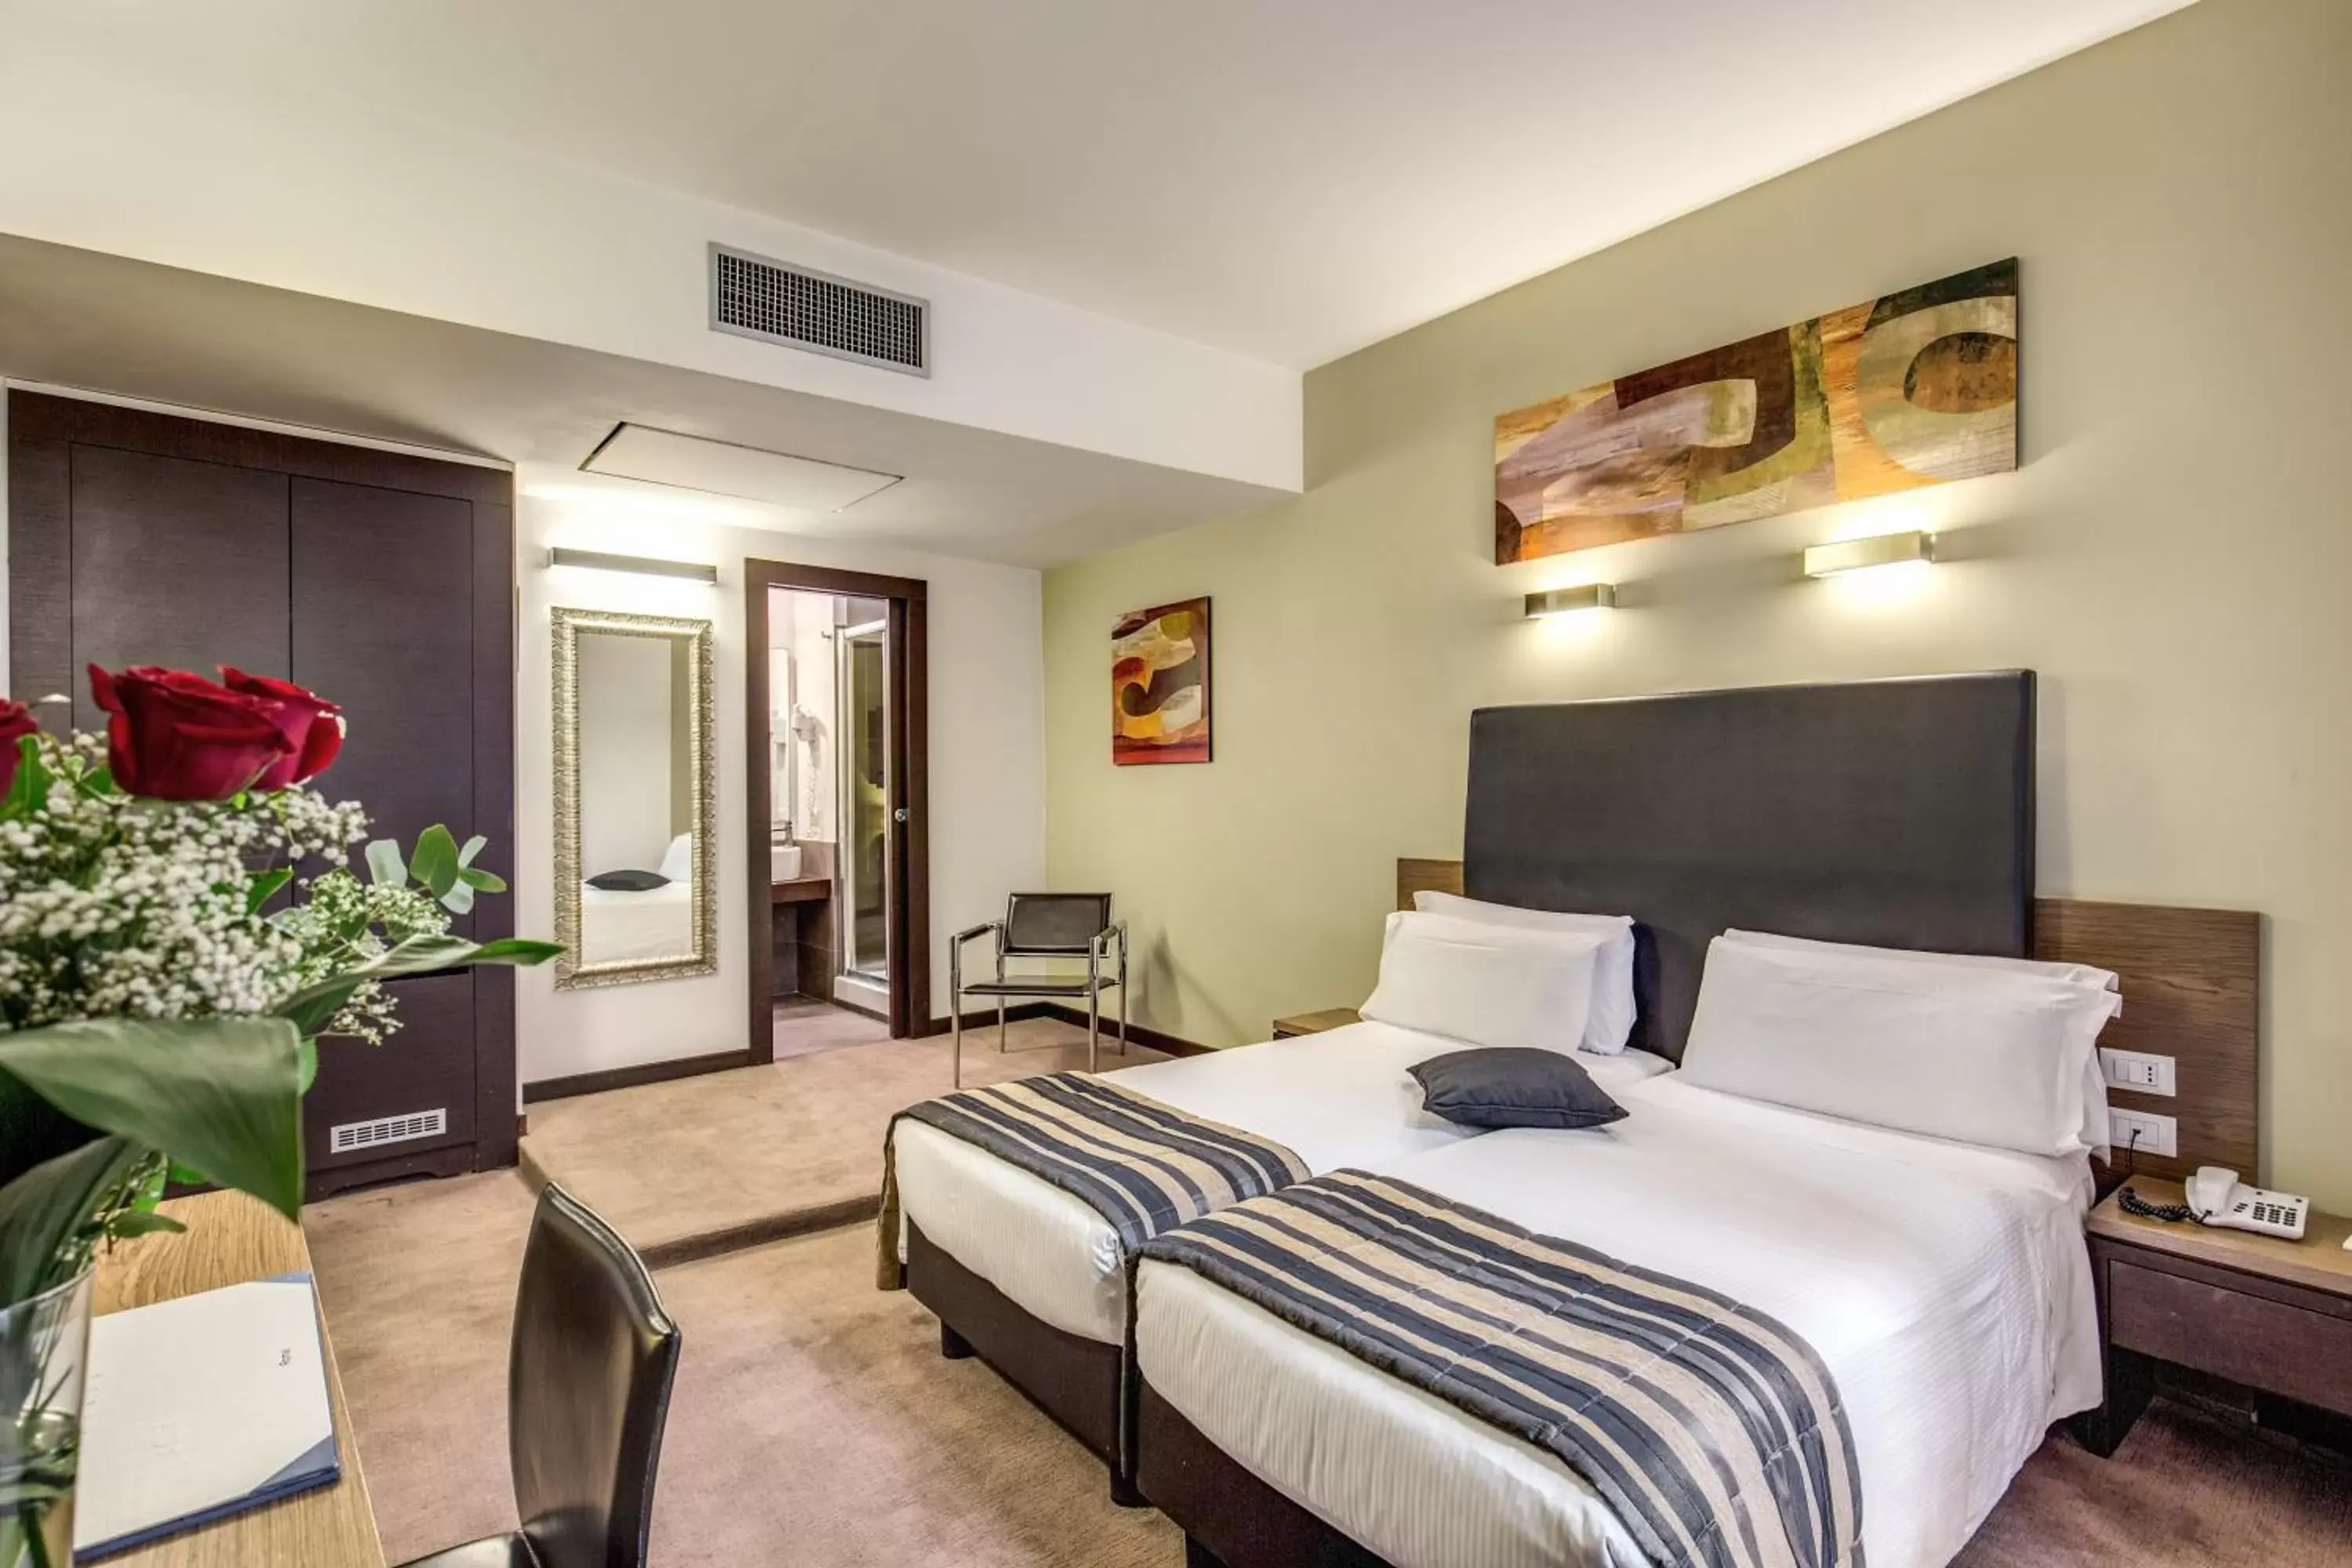 Photo of the whole room in Hotel Rinascimento - Gruppo Trevi Hotels